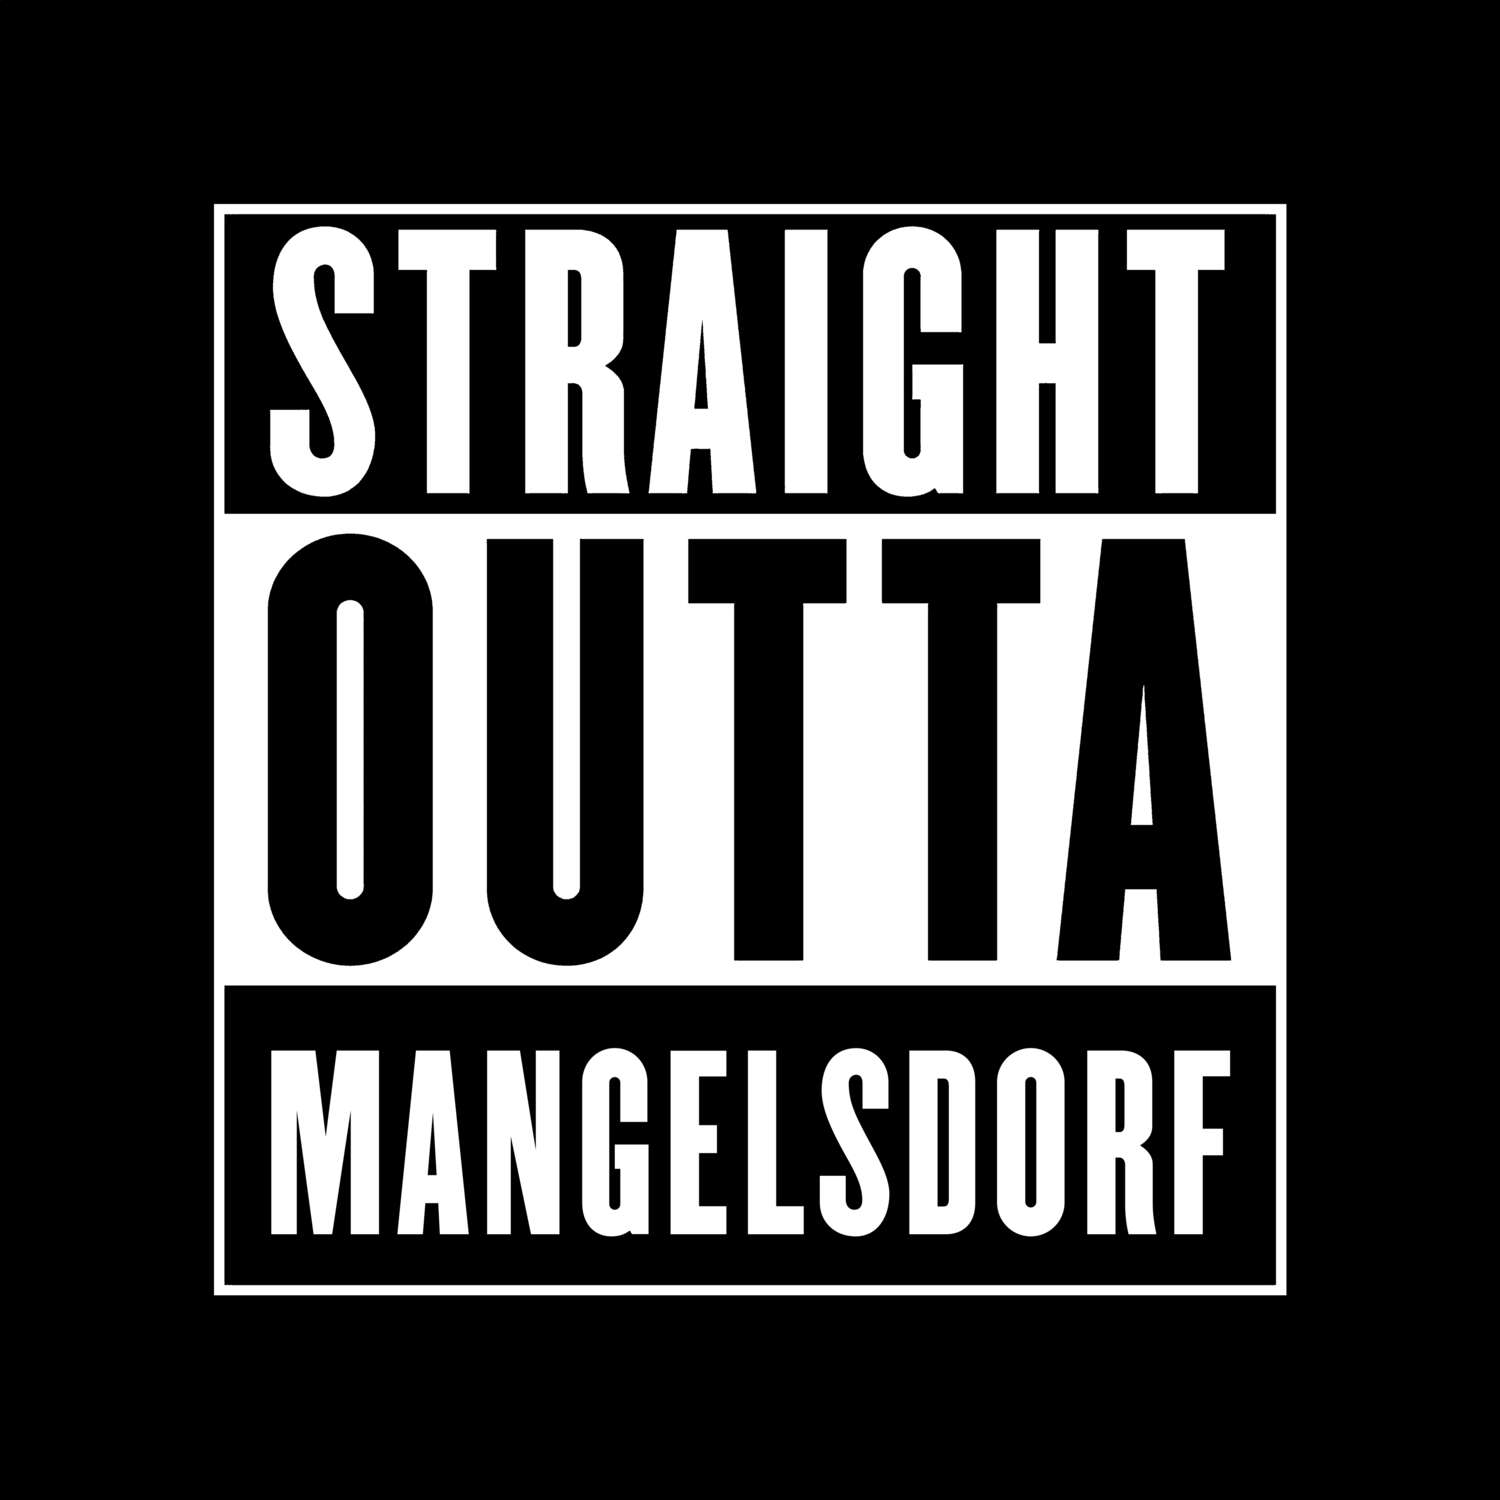 Mangelsdorf T-Shirt »Straight Outta«